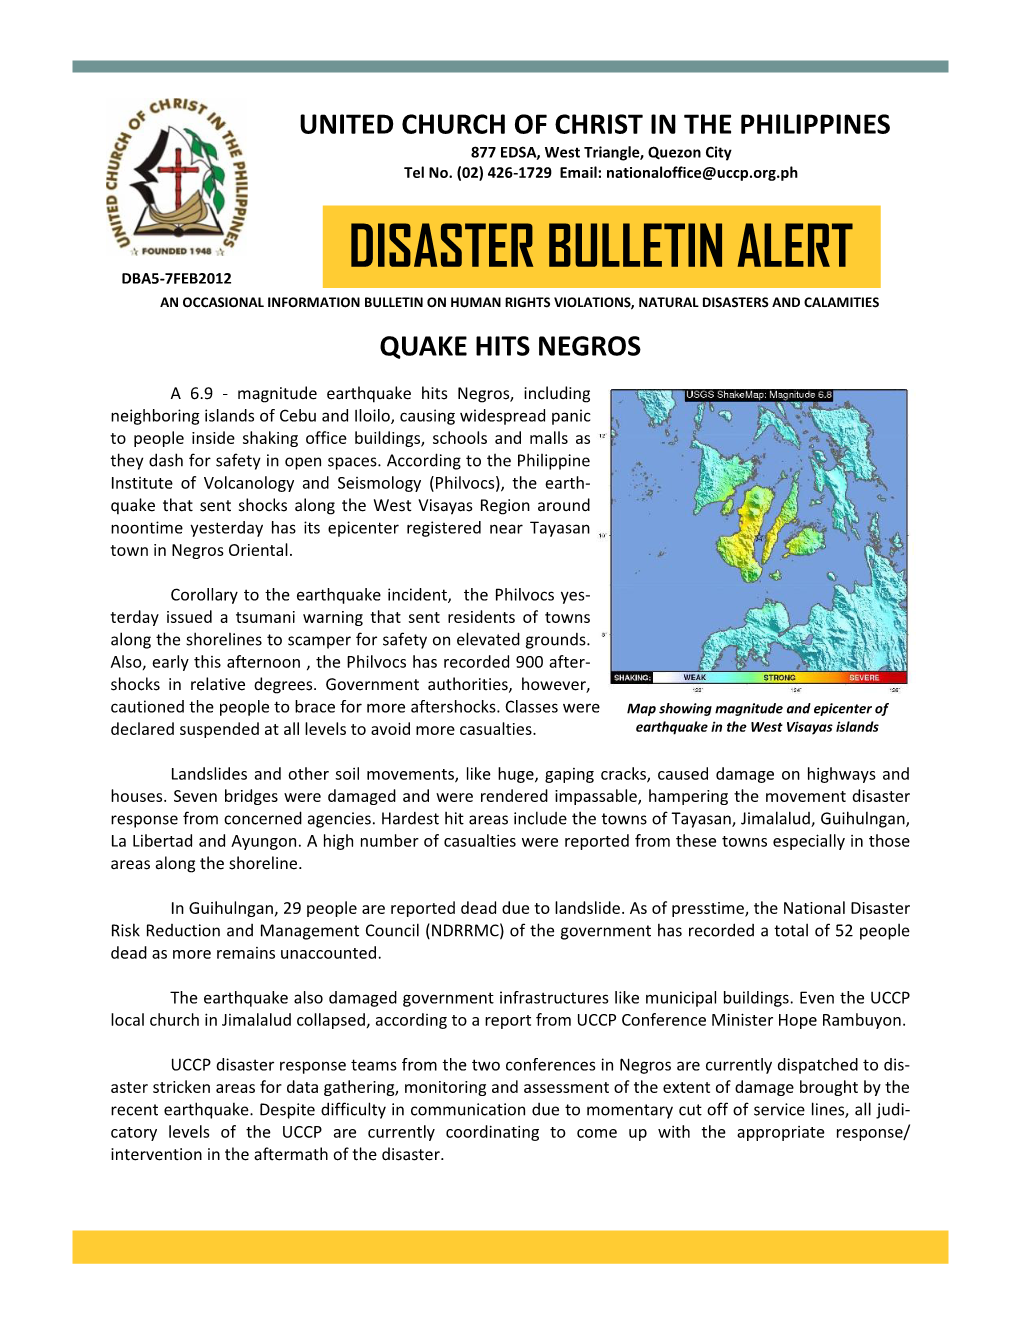 Disaster Bulletin Alert Dba5-7Feb2012 an Occasional Information Bulletin on Human Rights Violations, Natural Disasters and Calamities Quake Hits Negros